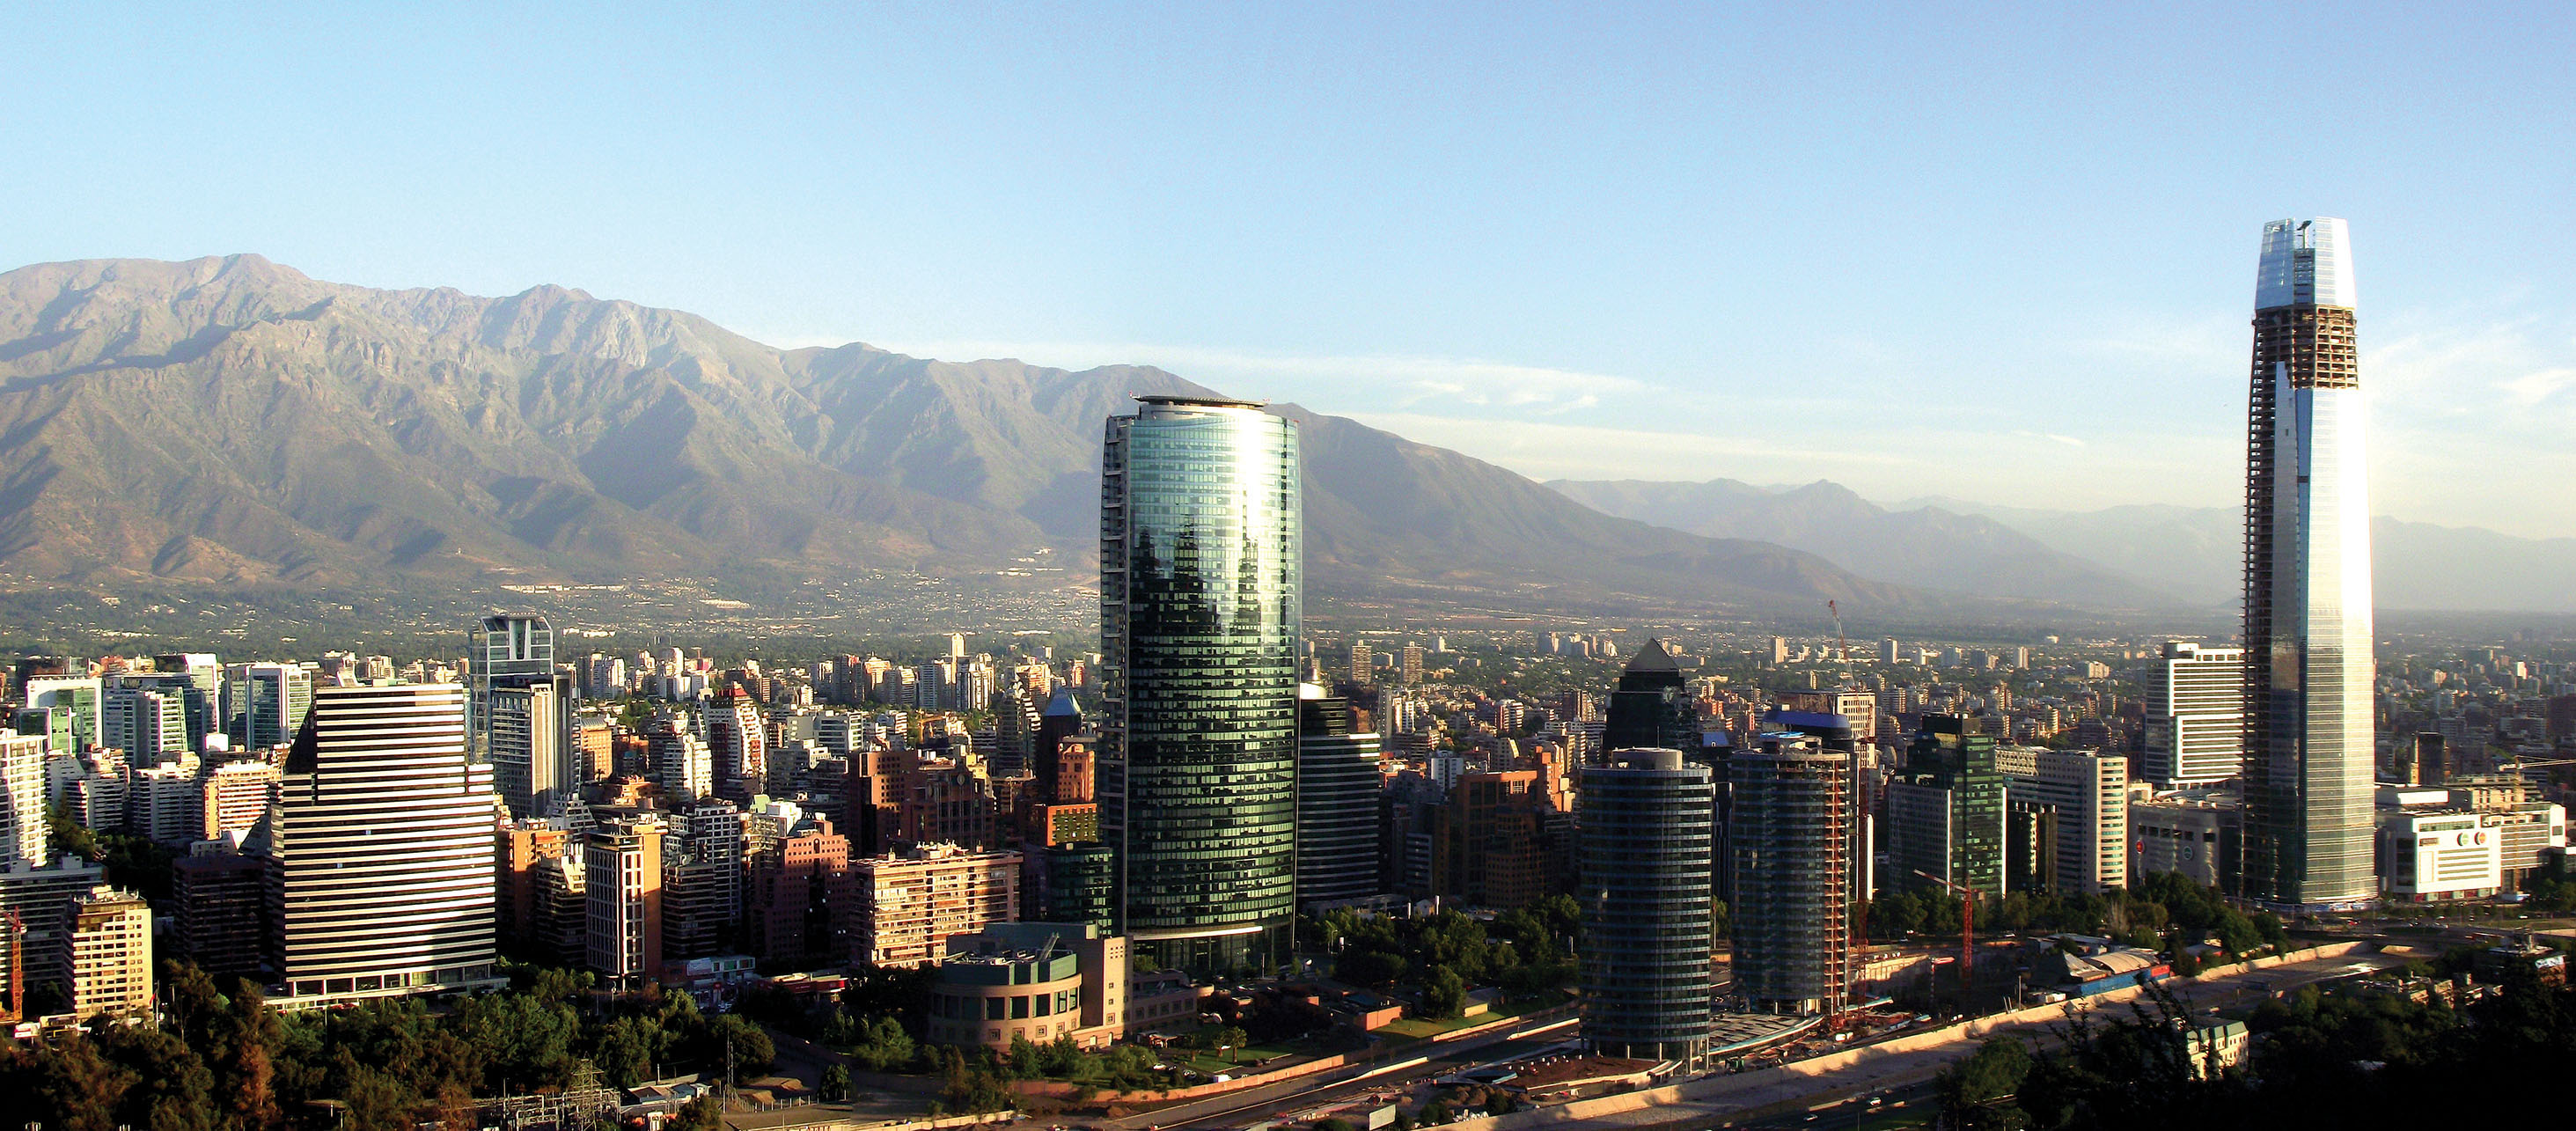 The modern skyscrapers of the Santiago skyline. (Photo by Diego J. Valdivia.)